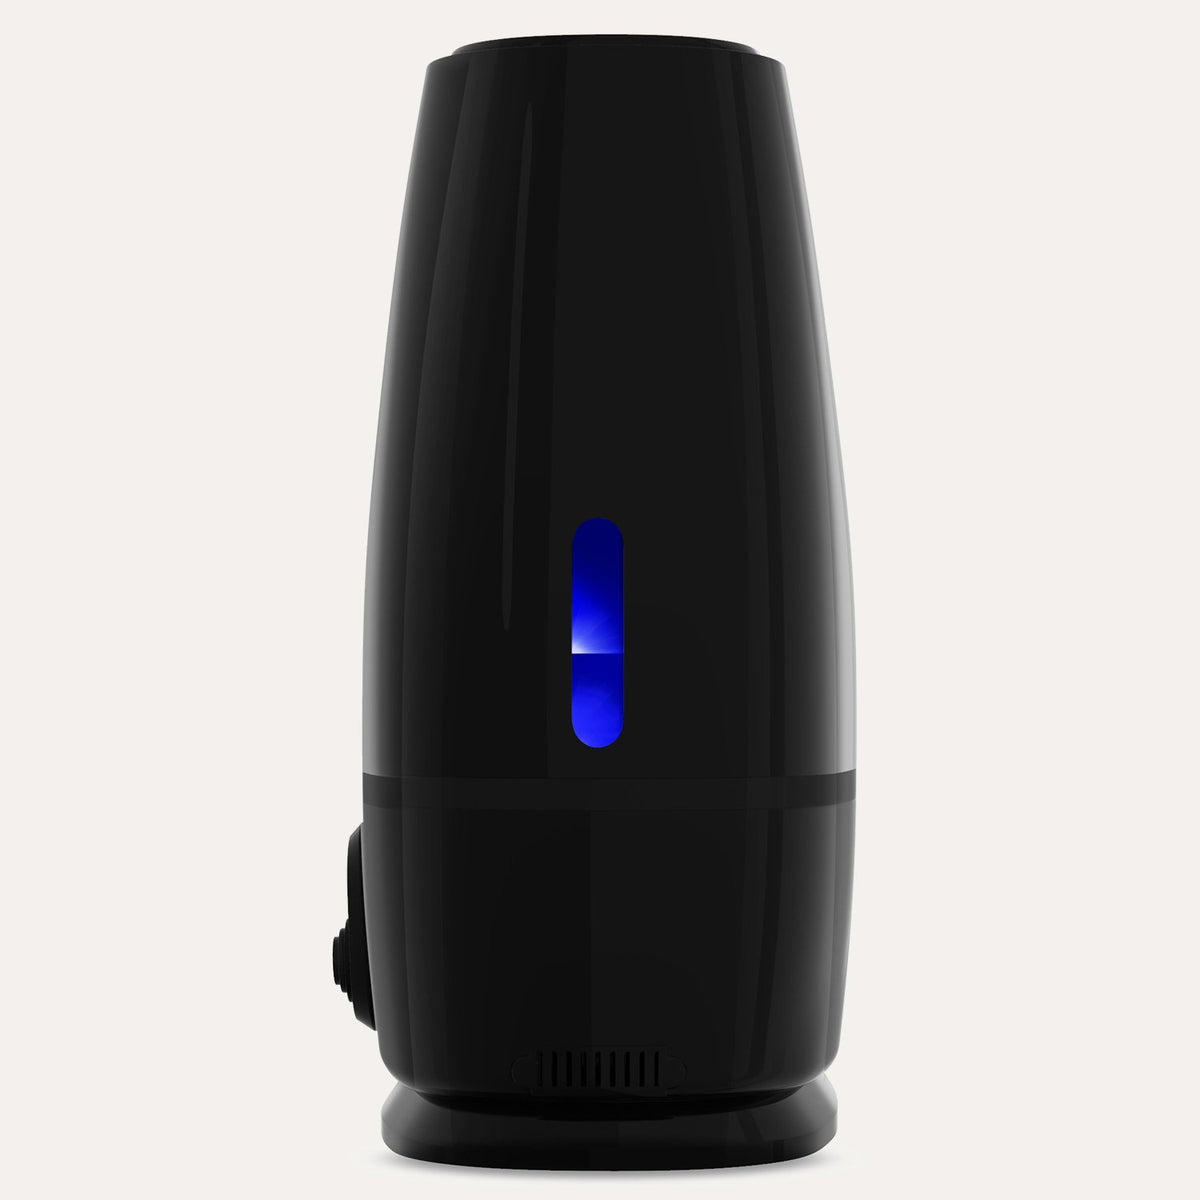 Everlasting Comfort Ultrasonic Cool Mist Humidifier (6L) - Essential Oil